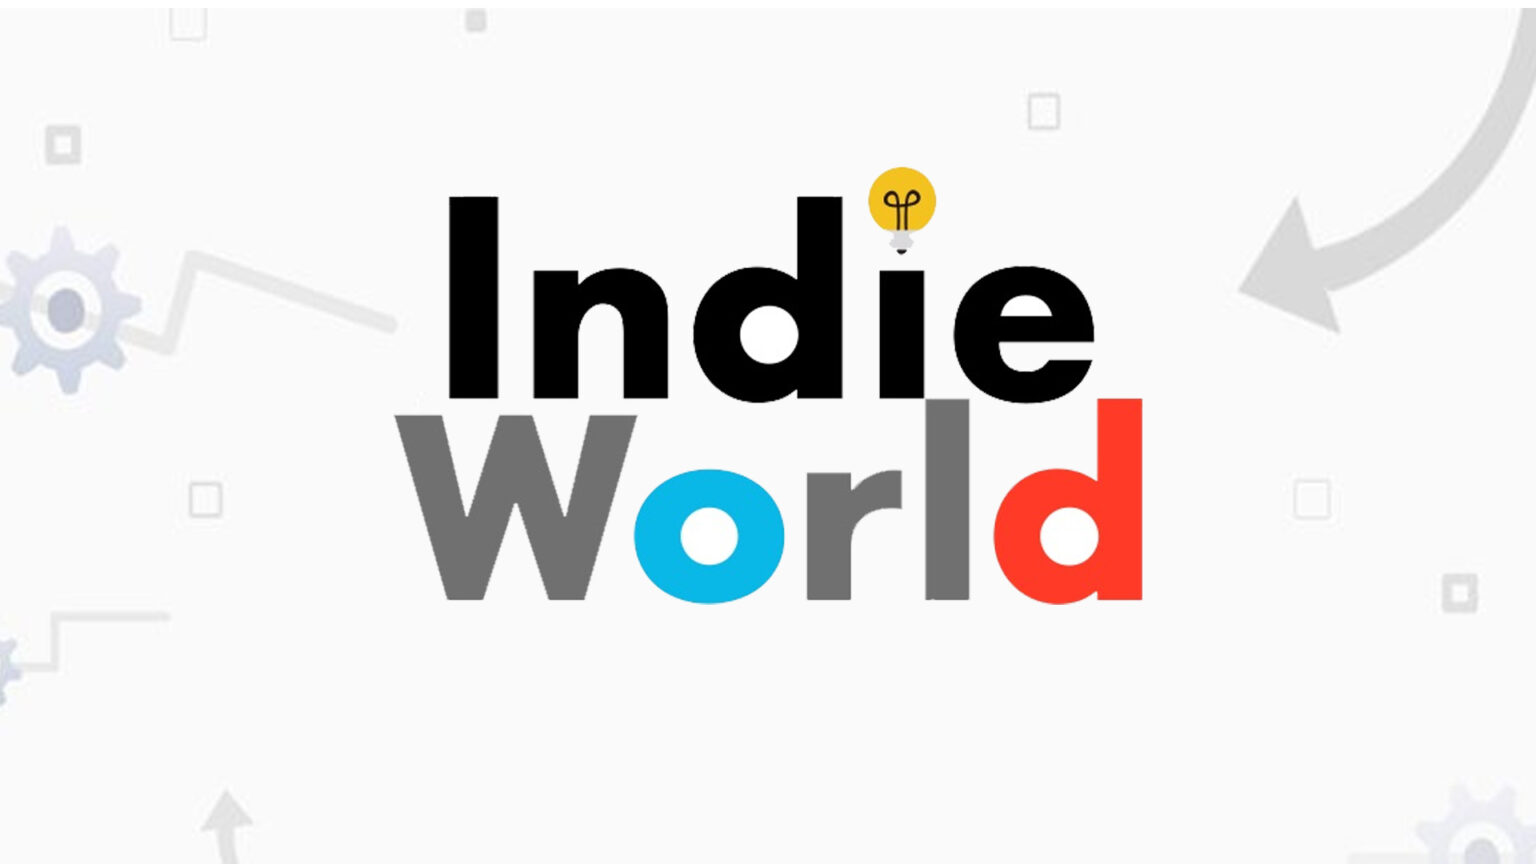 Nintendo Indie World Showcase Displays 2021 Plans